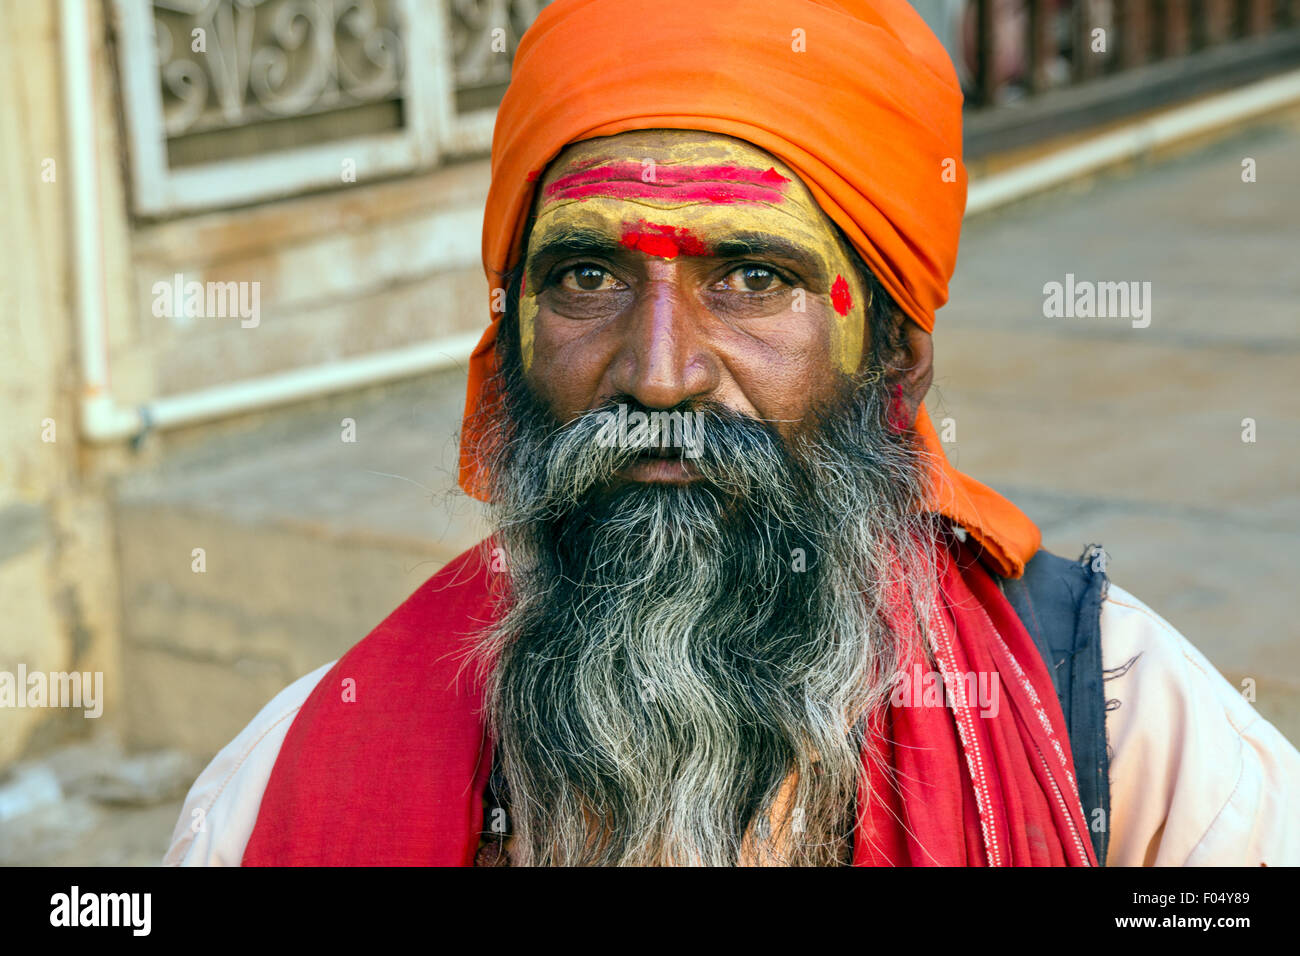 Portrait of a Rajasthani man with orange turban and beard, Jaisalmer, Rajasthan, India Stock Photo